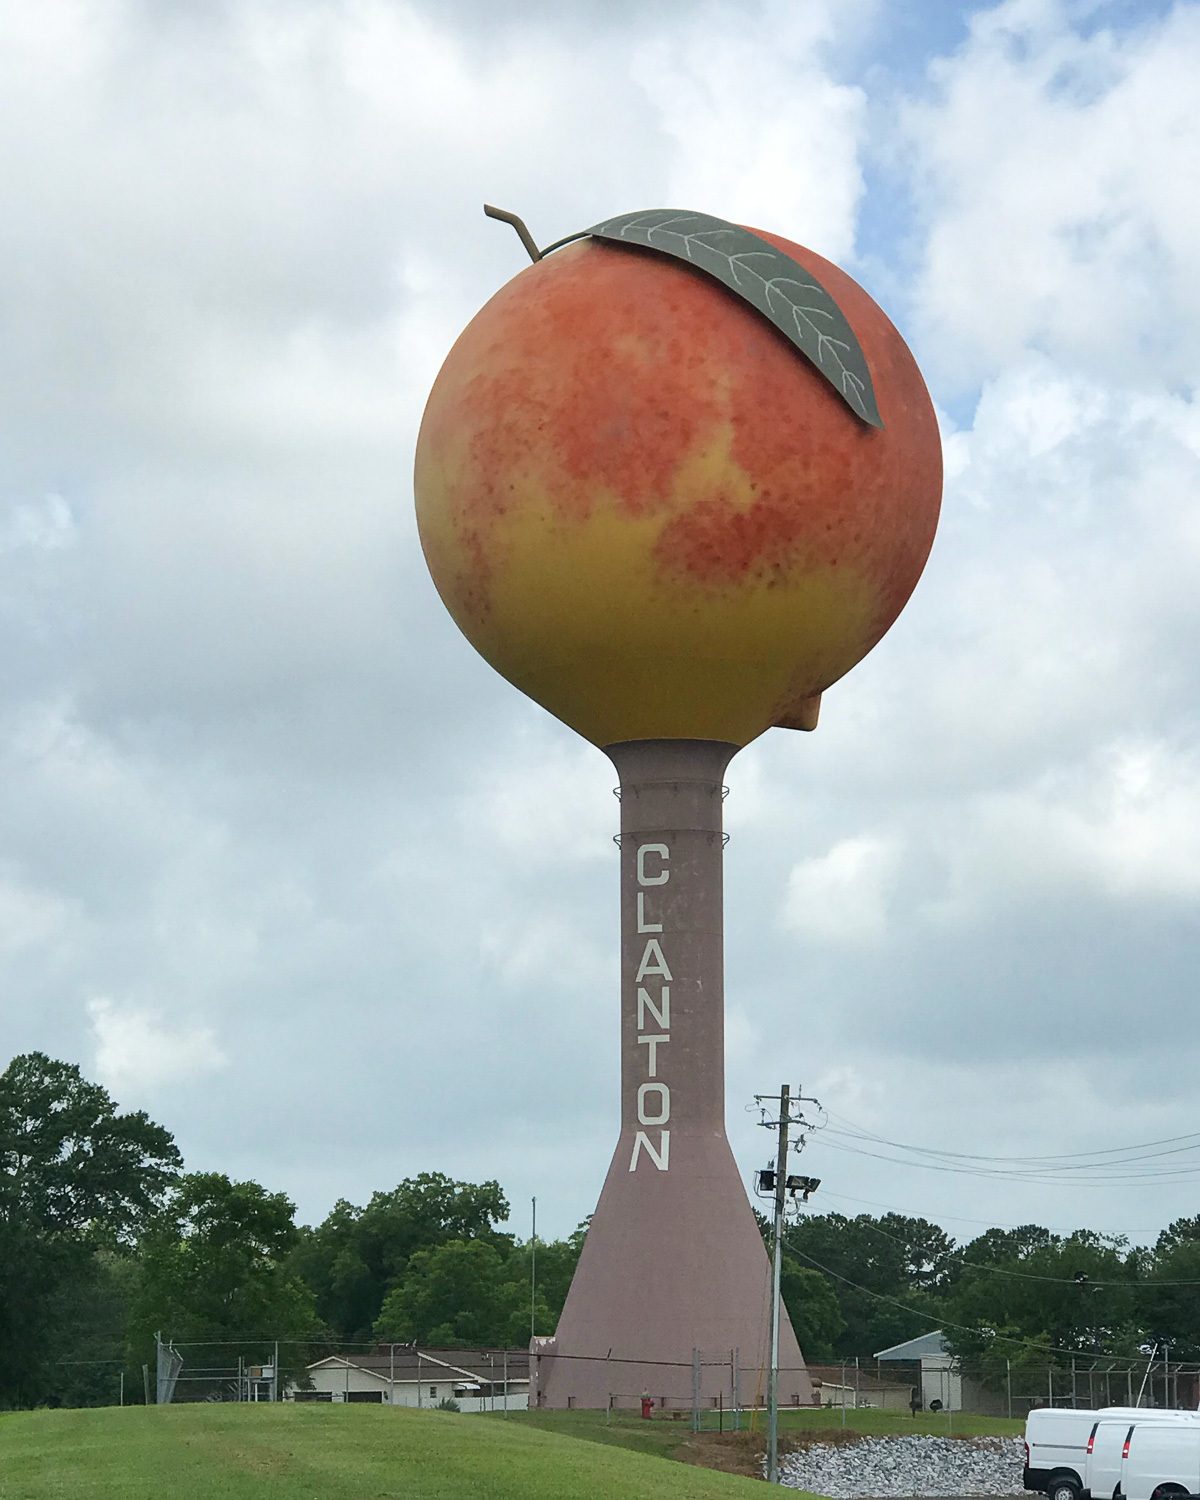 Peach Tower in Clanton Alabama